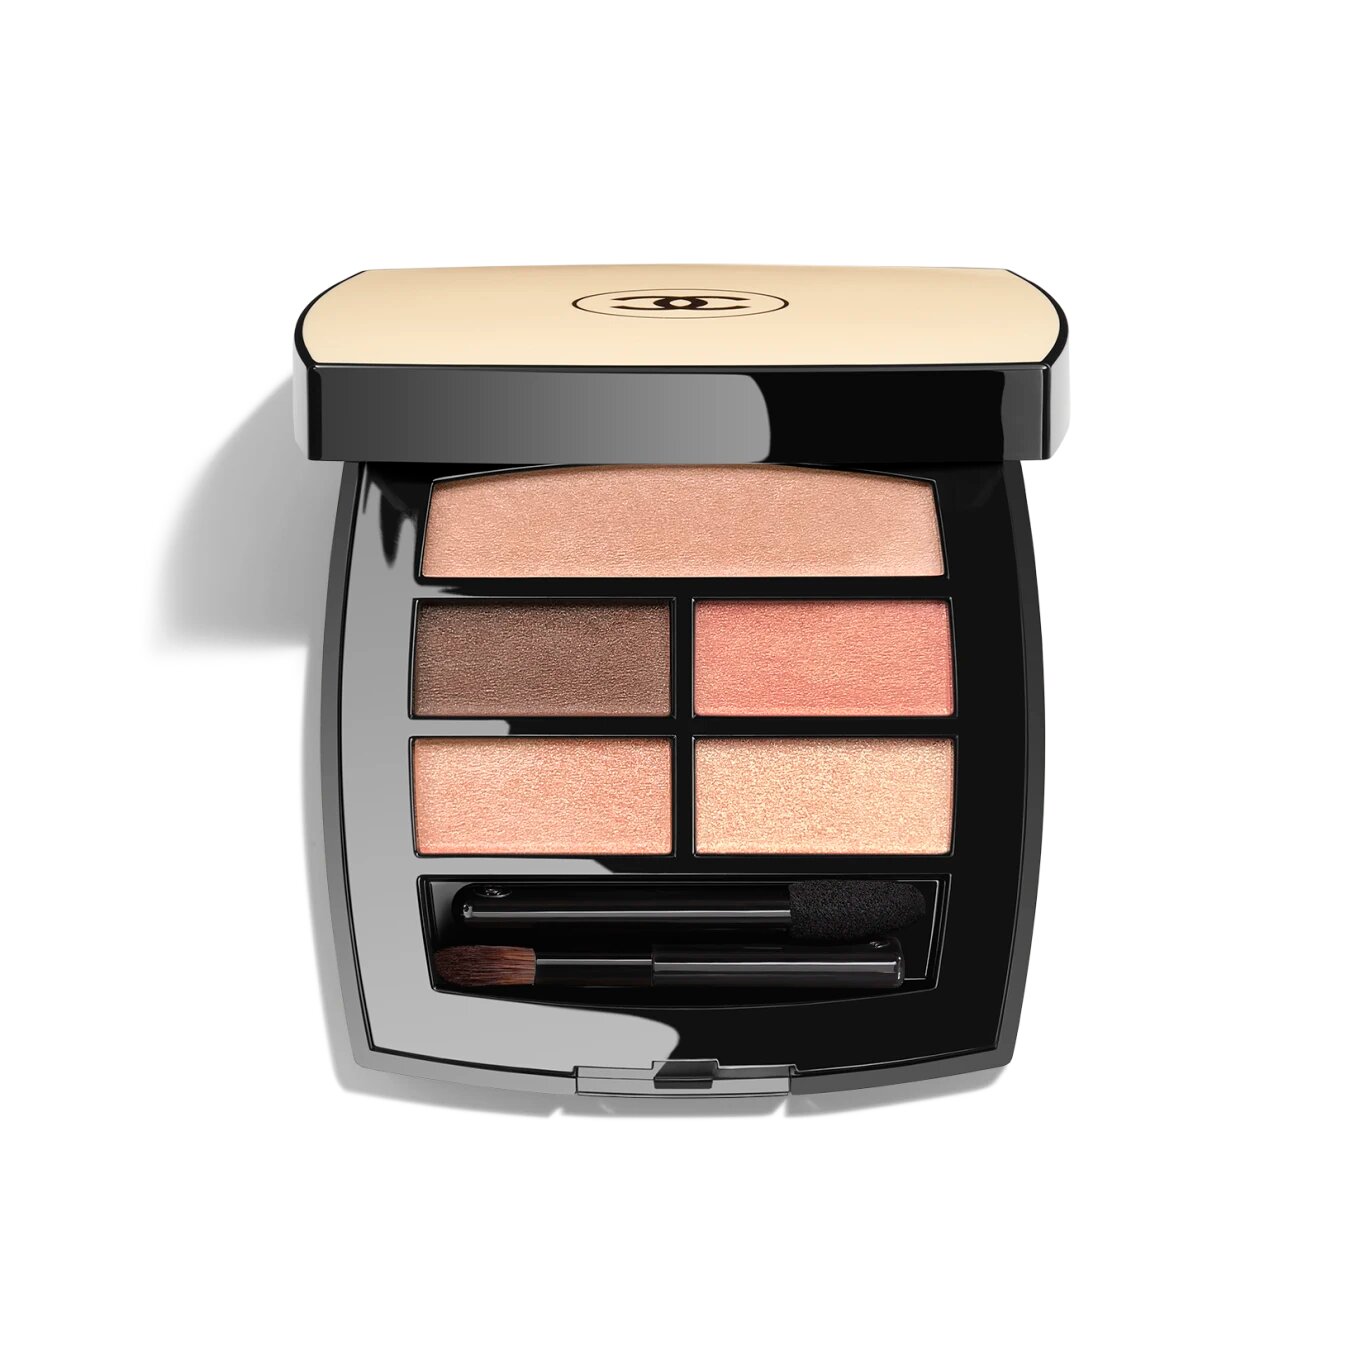 Палетка теней Chanel Les Beiges Healthy Glow Natural Eyeshadow Palette, 4.5г, оттенок Warm